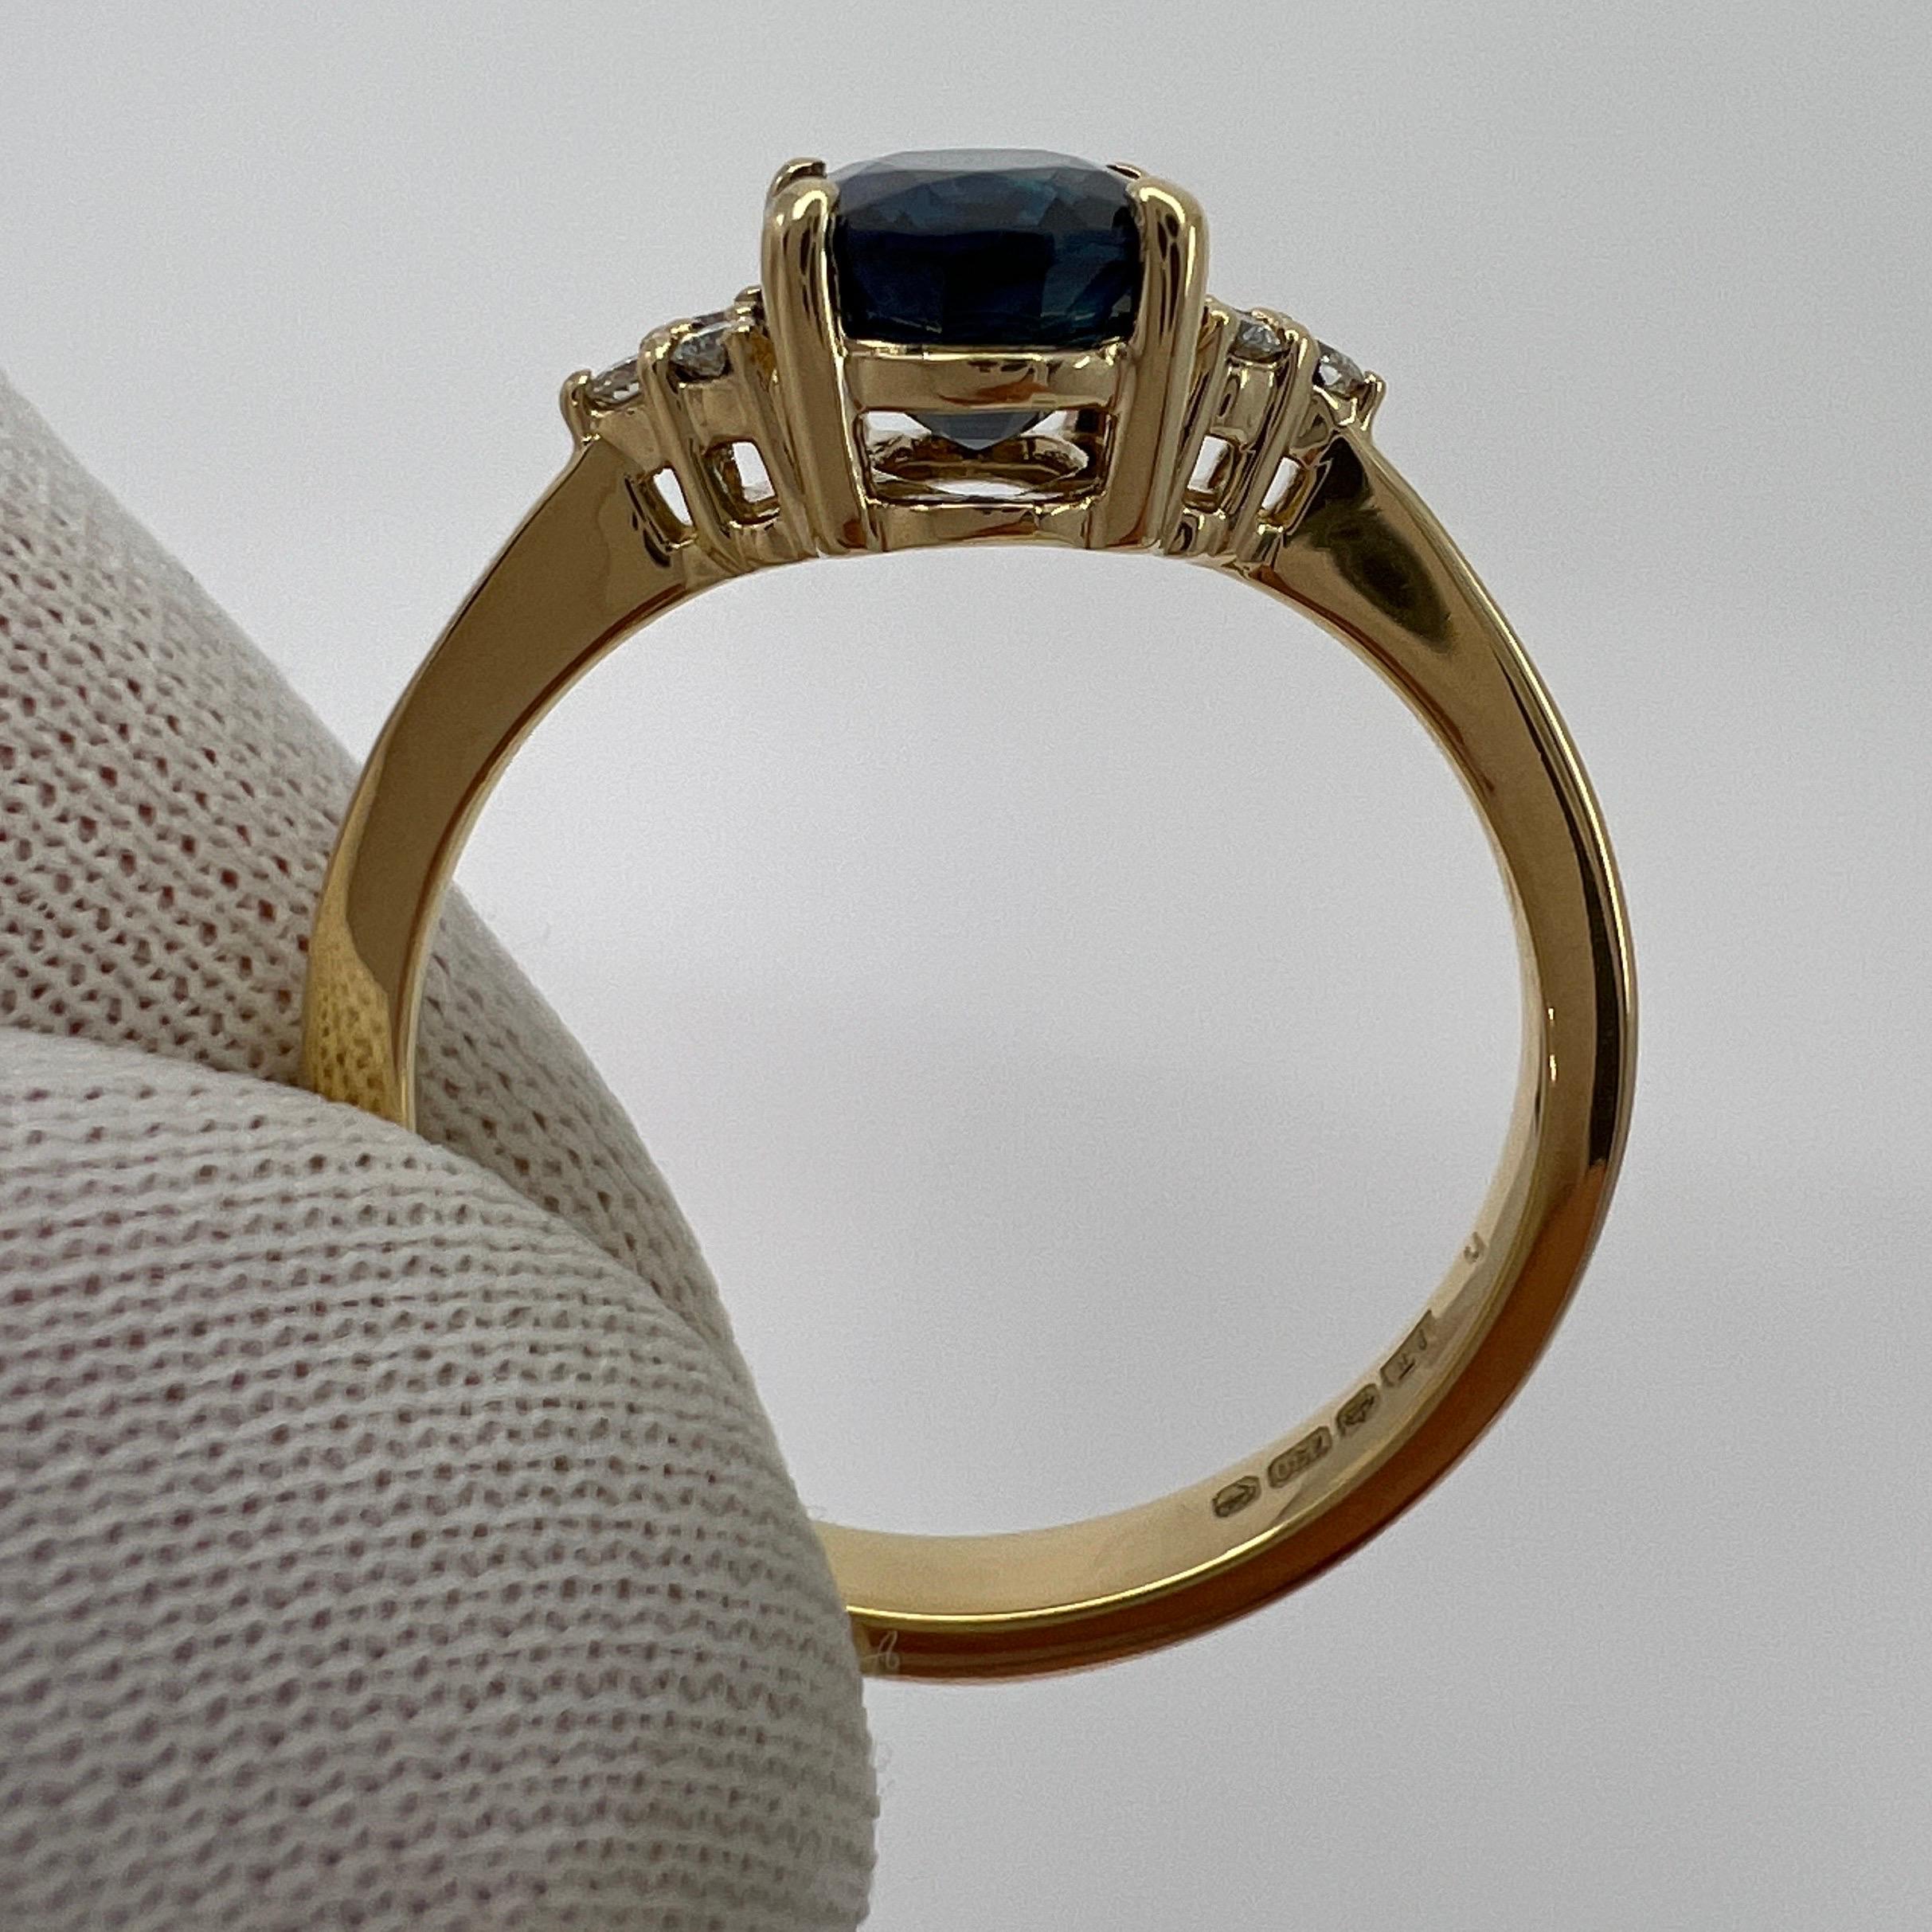 1.71 Carat Deep Teal Blue Oval Cut Sapphire & Diamond 18k Yellow Gold Ring 2